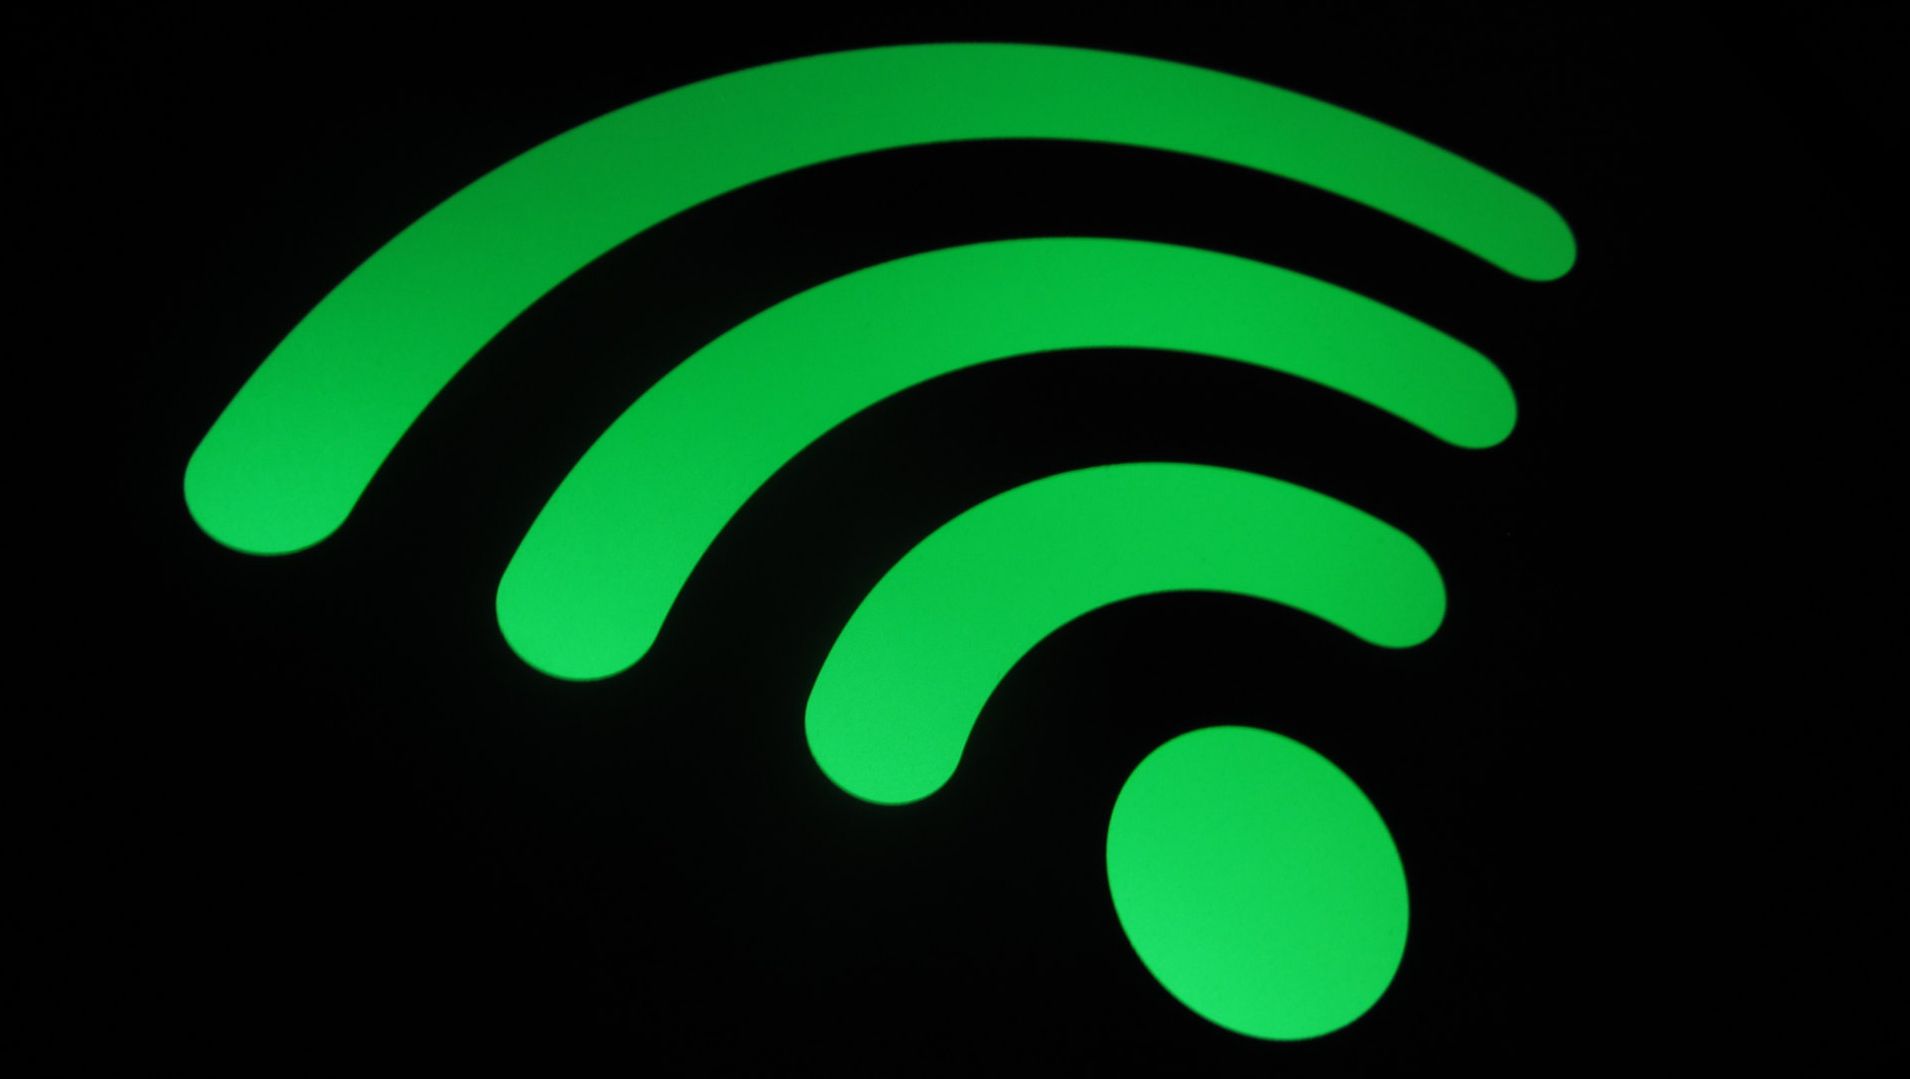 close up shot of green wifi logo on black background